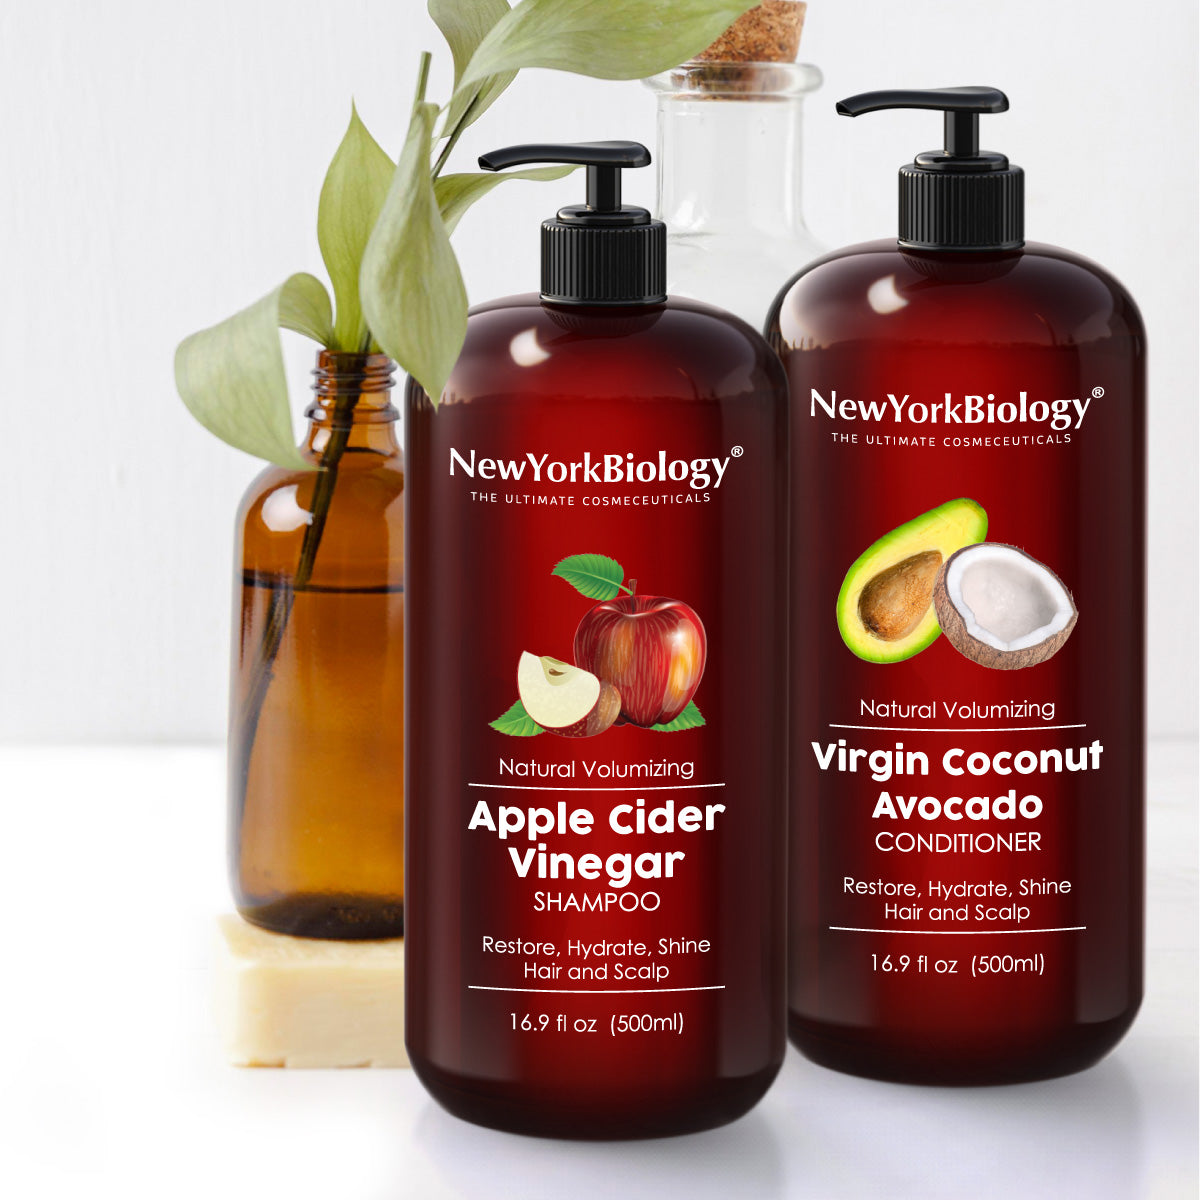 Apple Cider Vinegar Shampoo and Virgin Coconut Avocado Oil Conditioner - 16.9 fl Oz